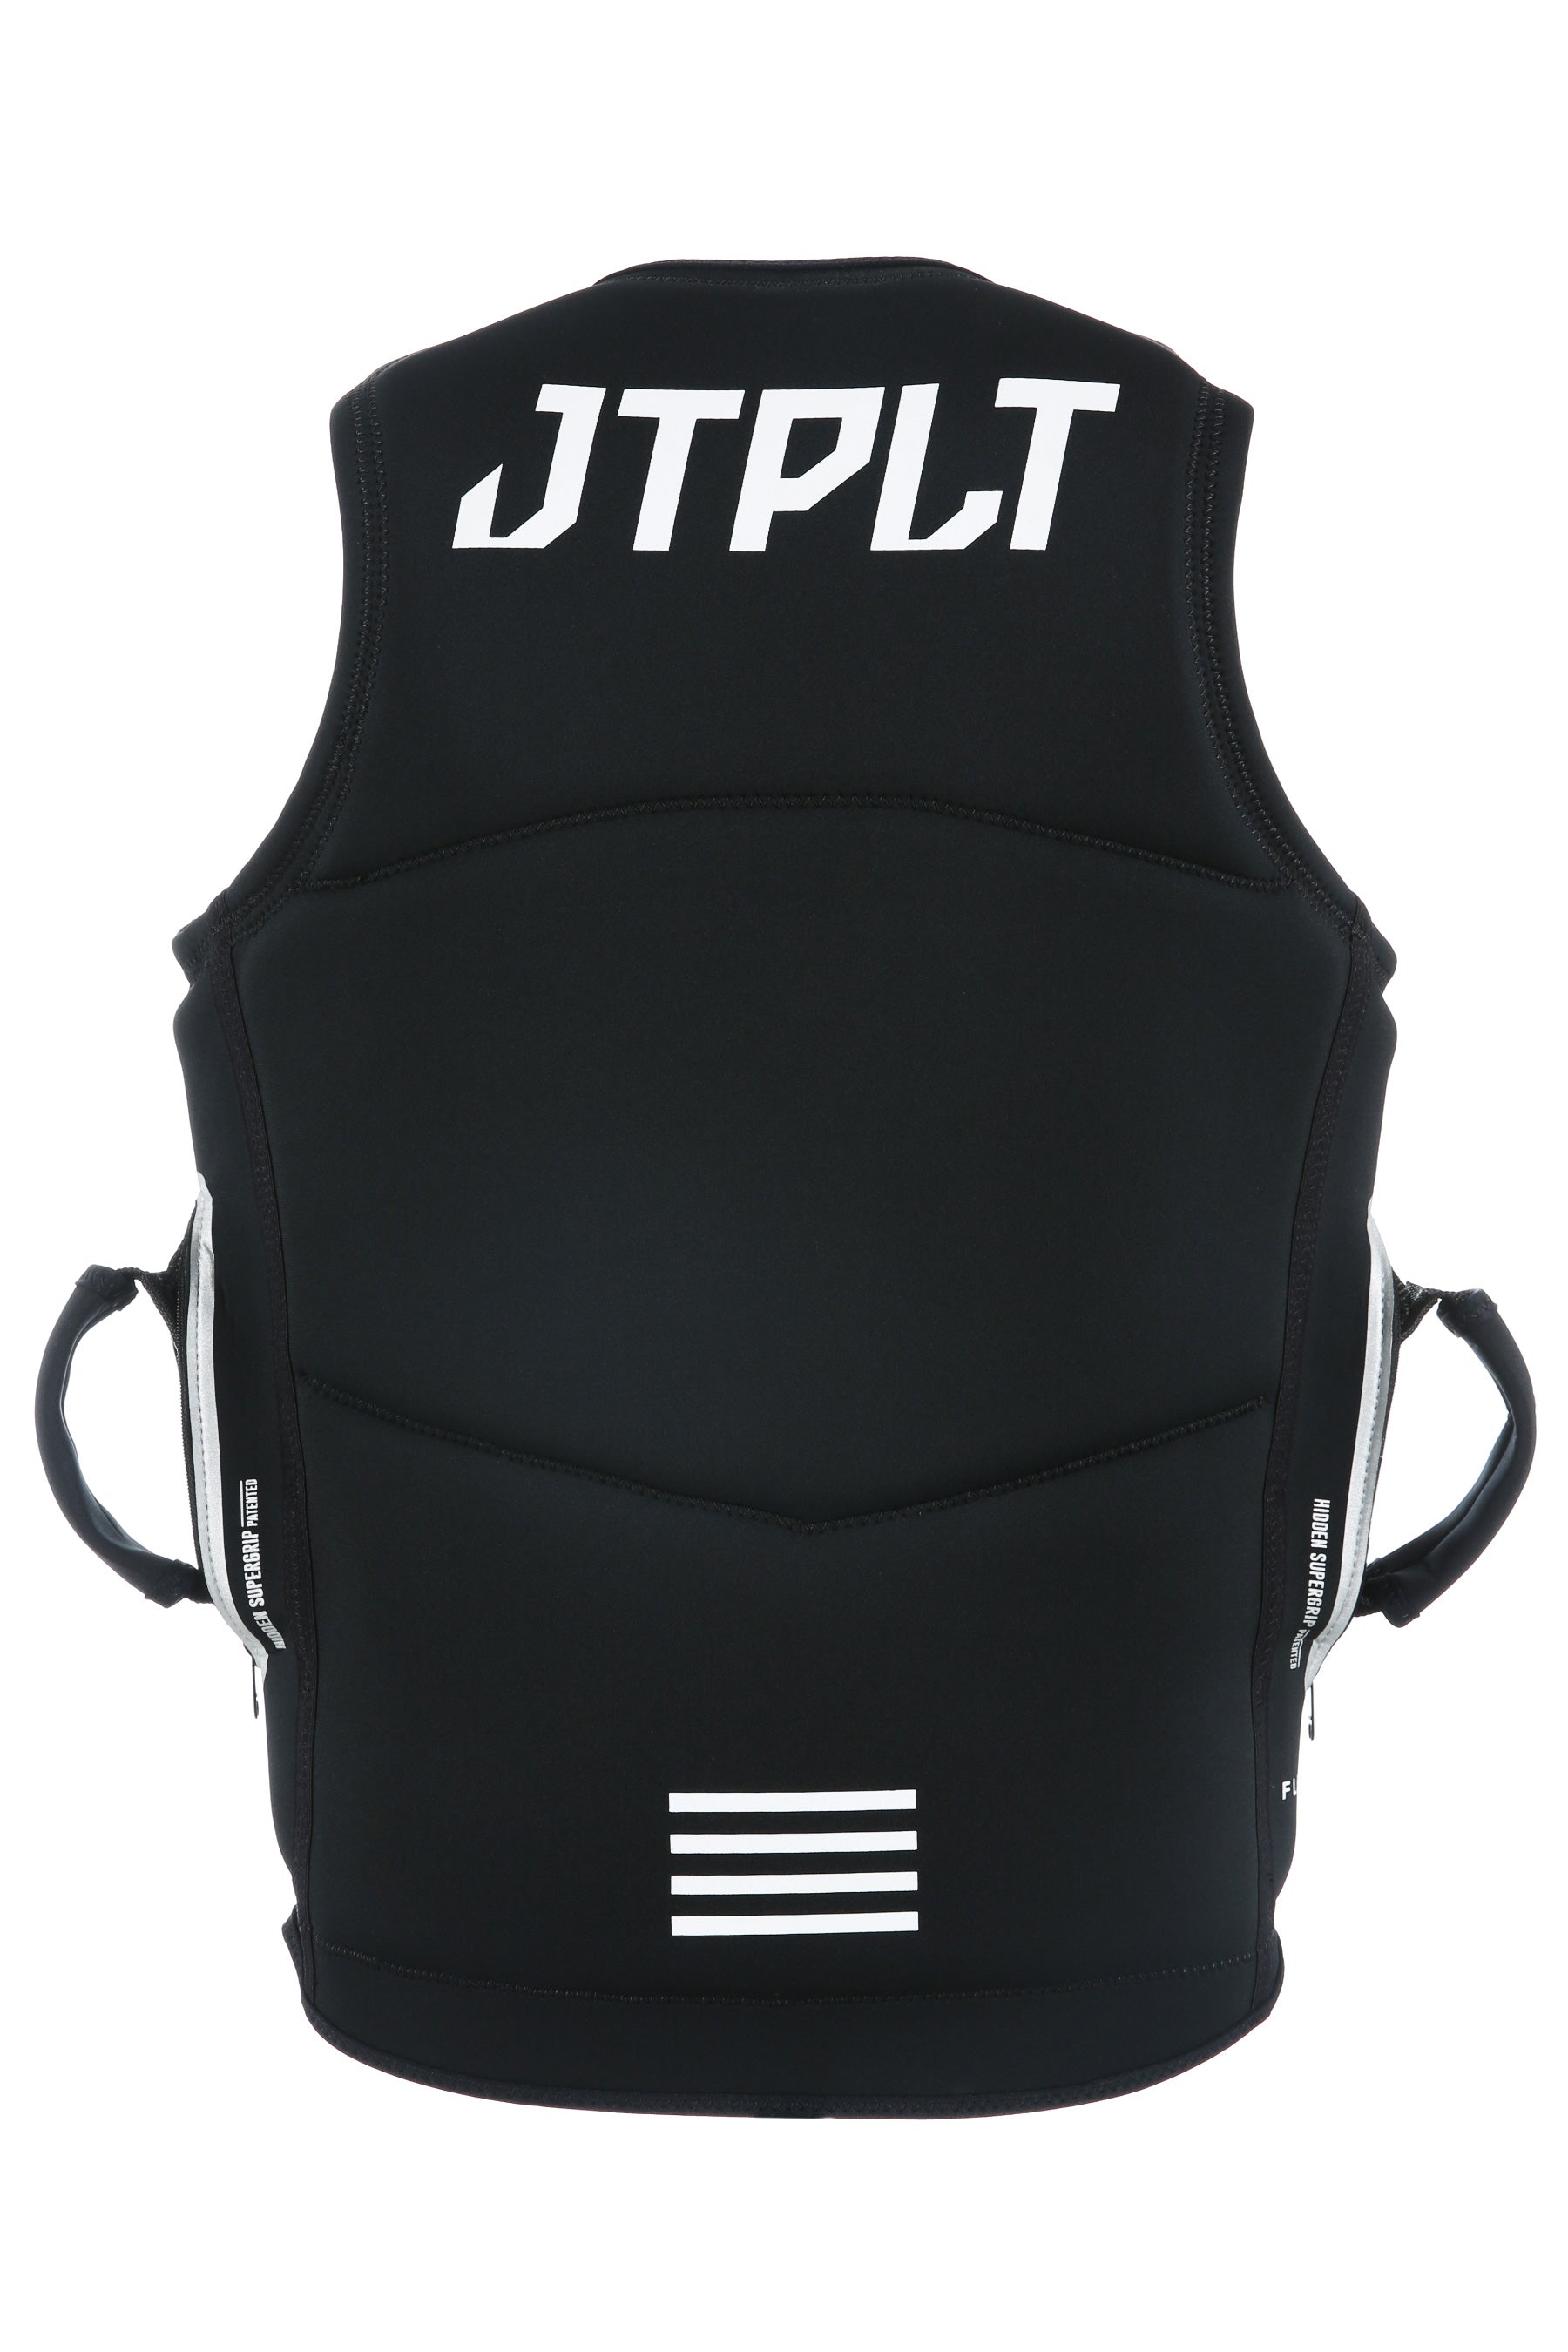 Jetpilot Vault Mens F/e Neo Vest Dual - Black/White Back